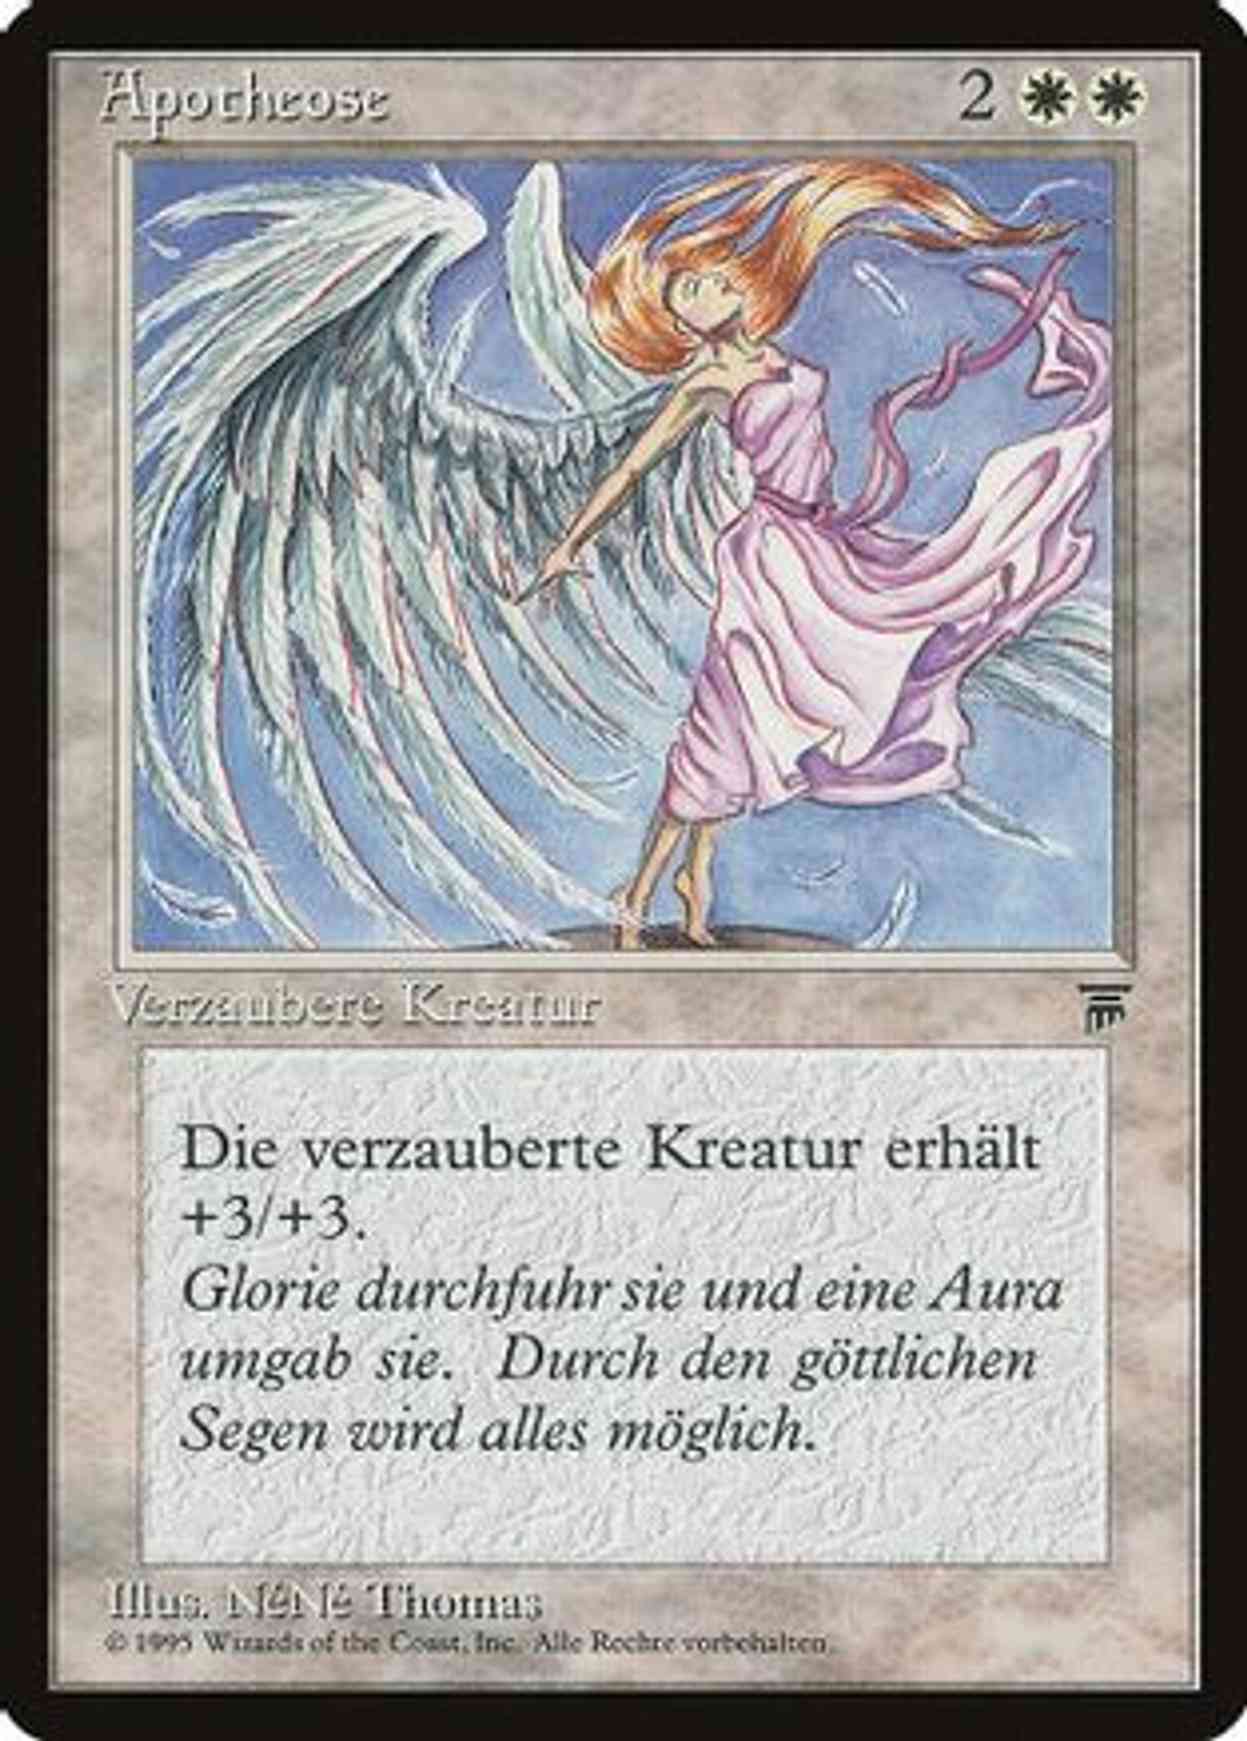 Divine Transformation (German) - "Apotheose" magic card front